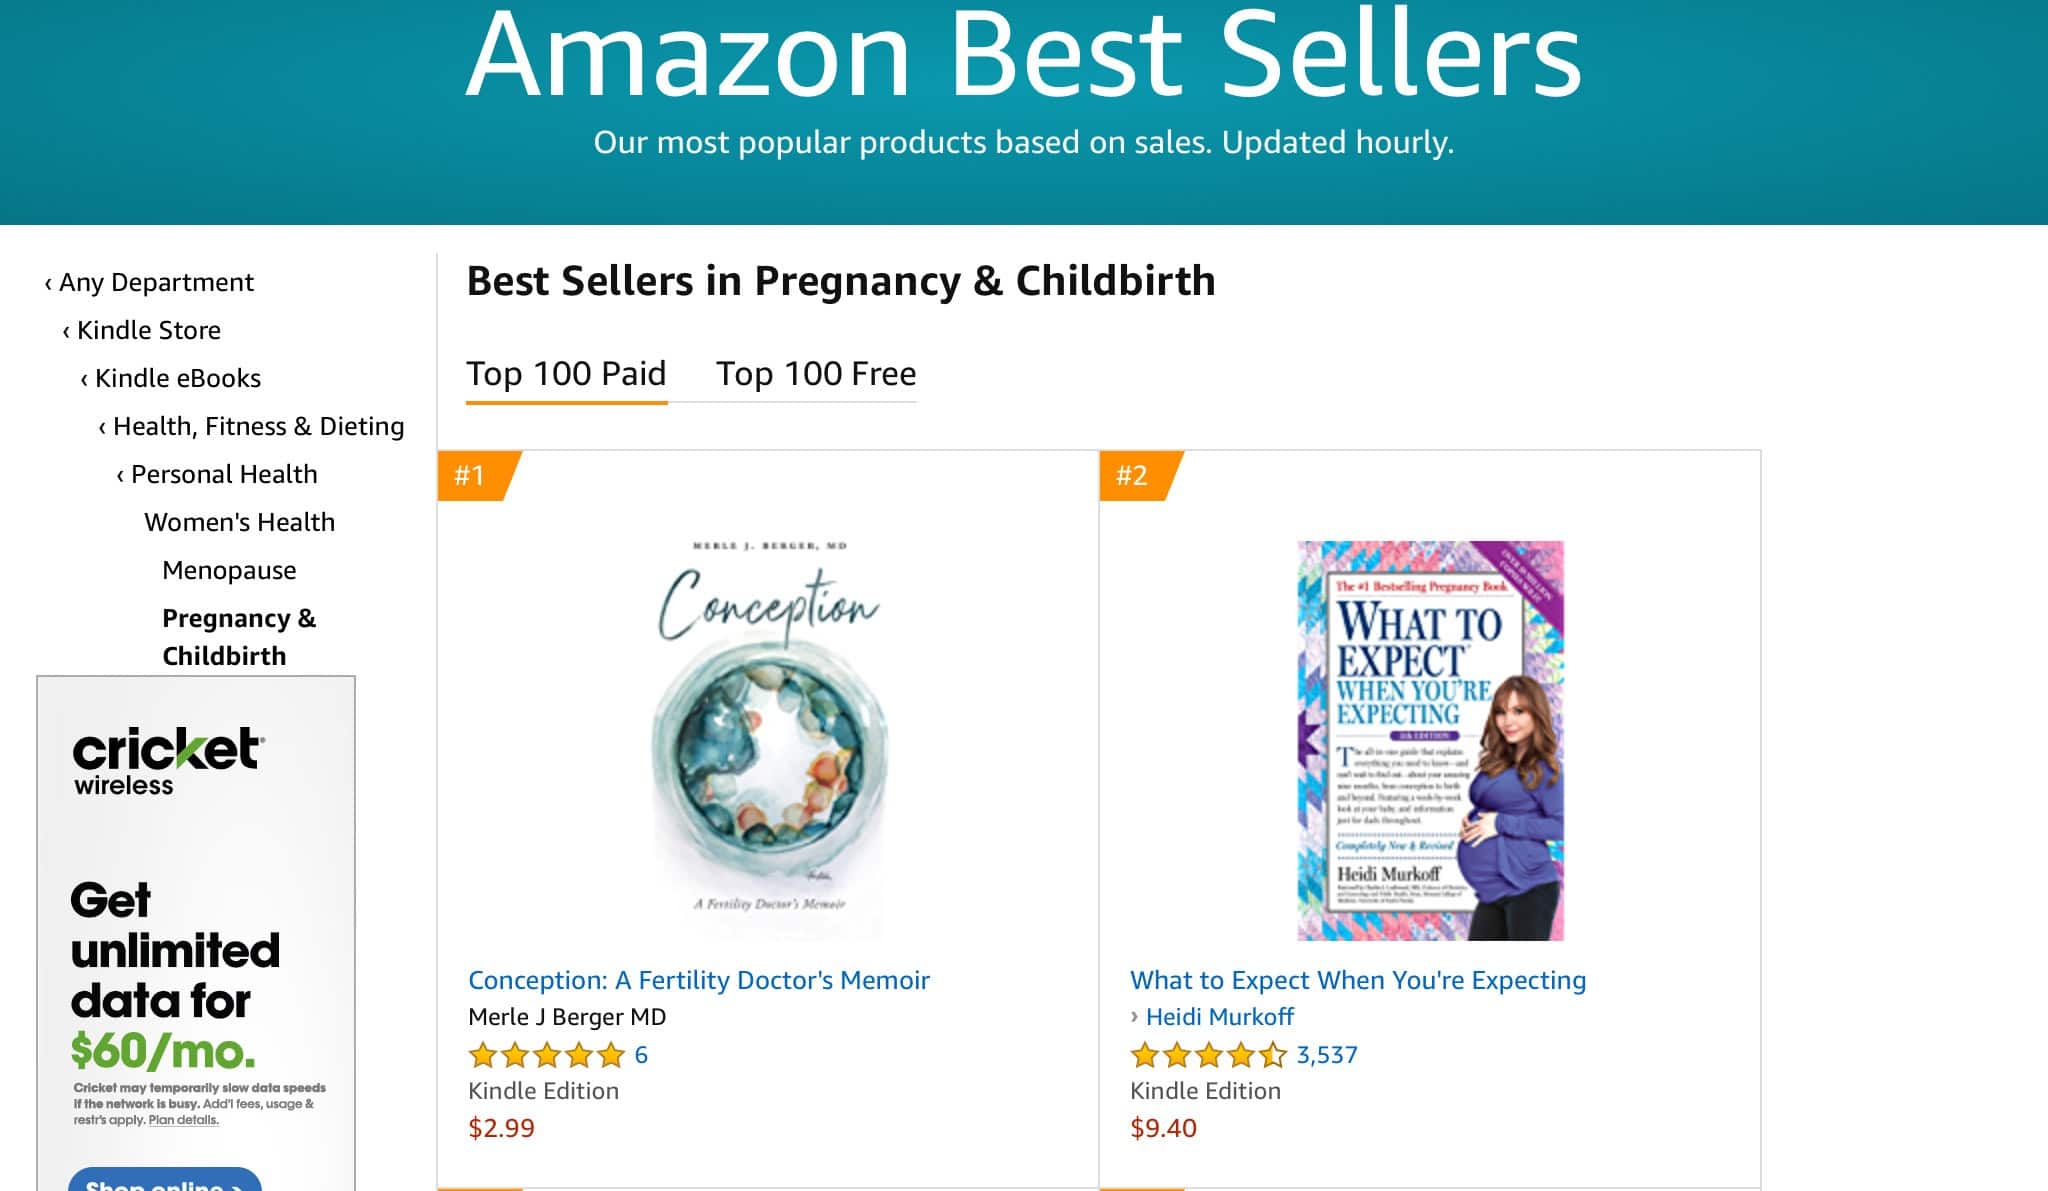 Conception A Fertility Doctors Memoir 1 | Mindstir Media Book Cover